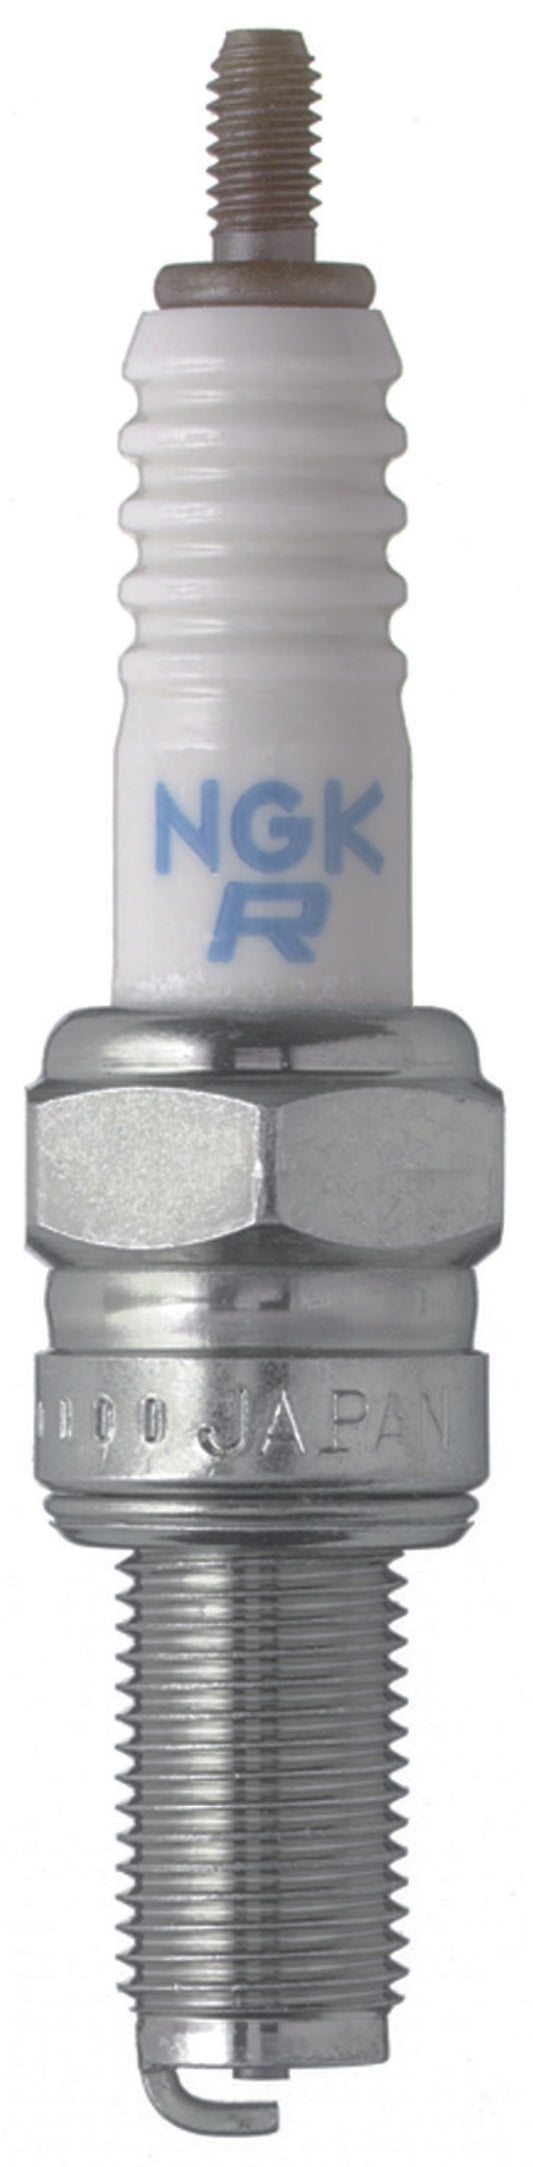 NGK Nickel Spark Plug - Box of 4 (CR8E)